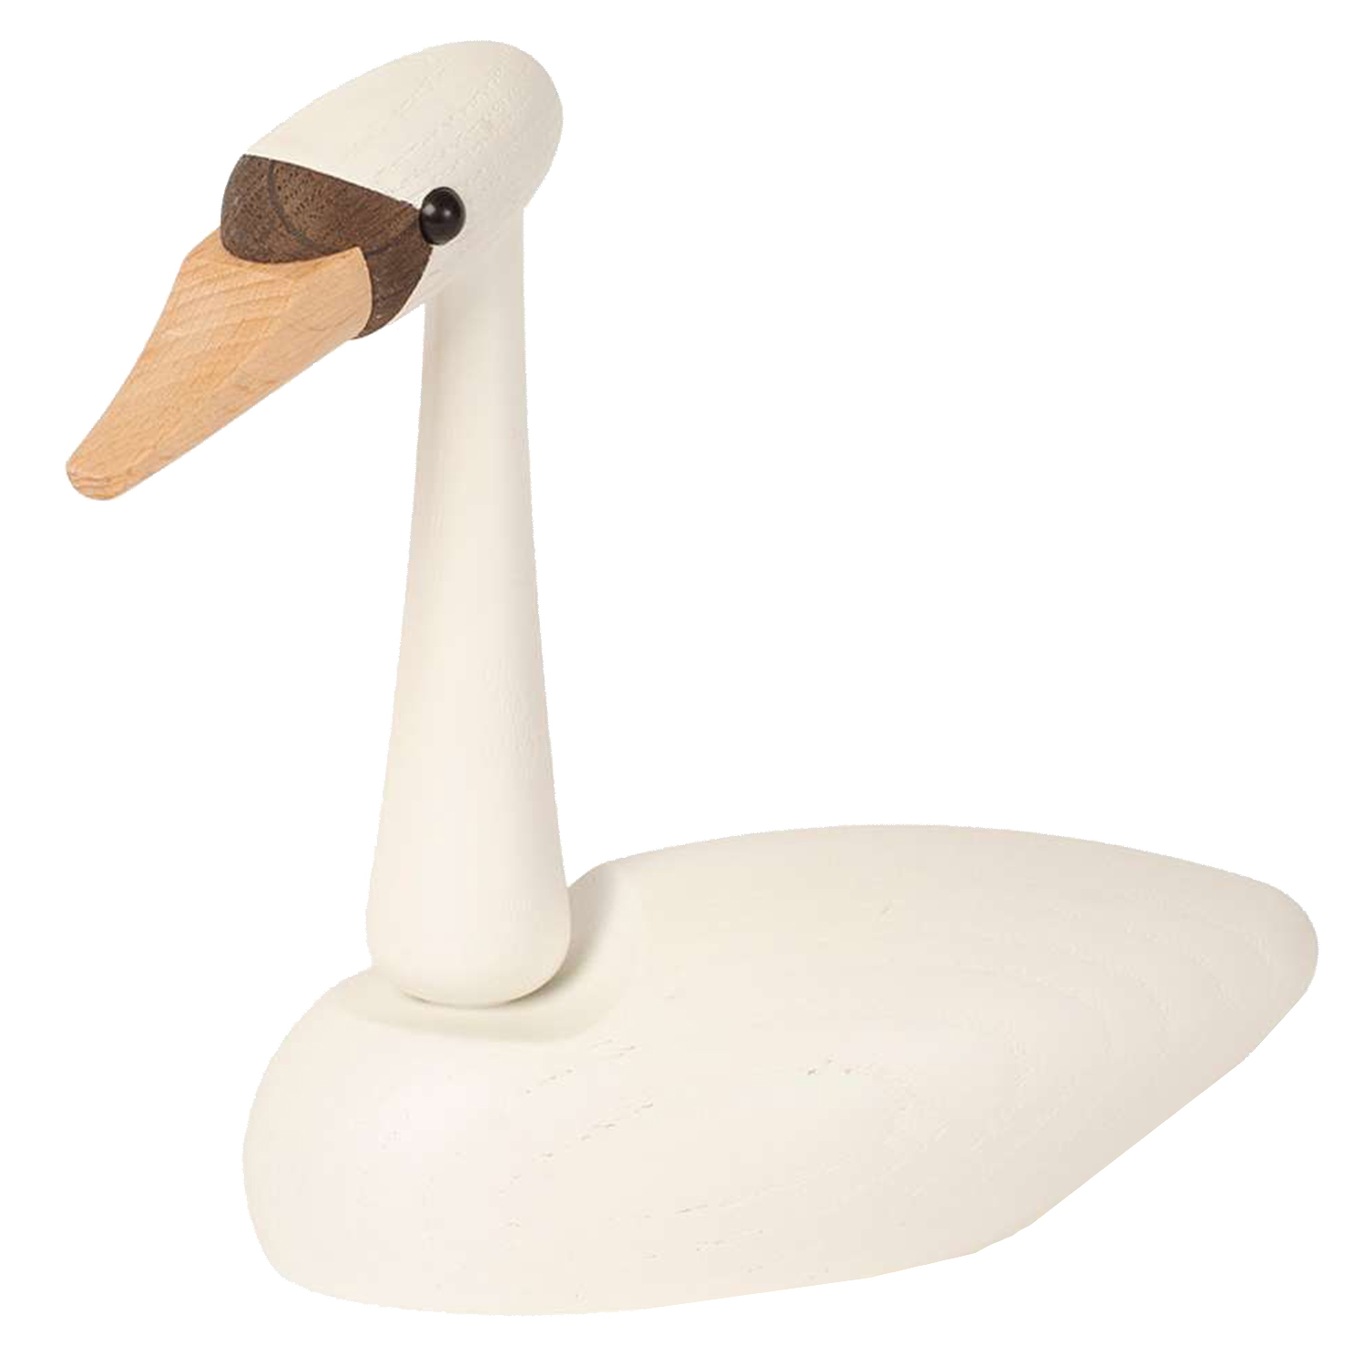 The Swan Wooden Figurine 13 cm, White